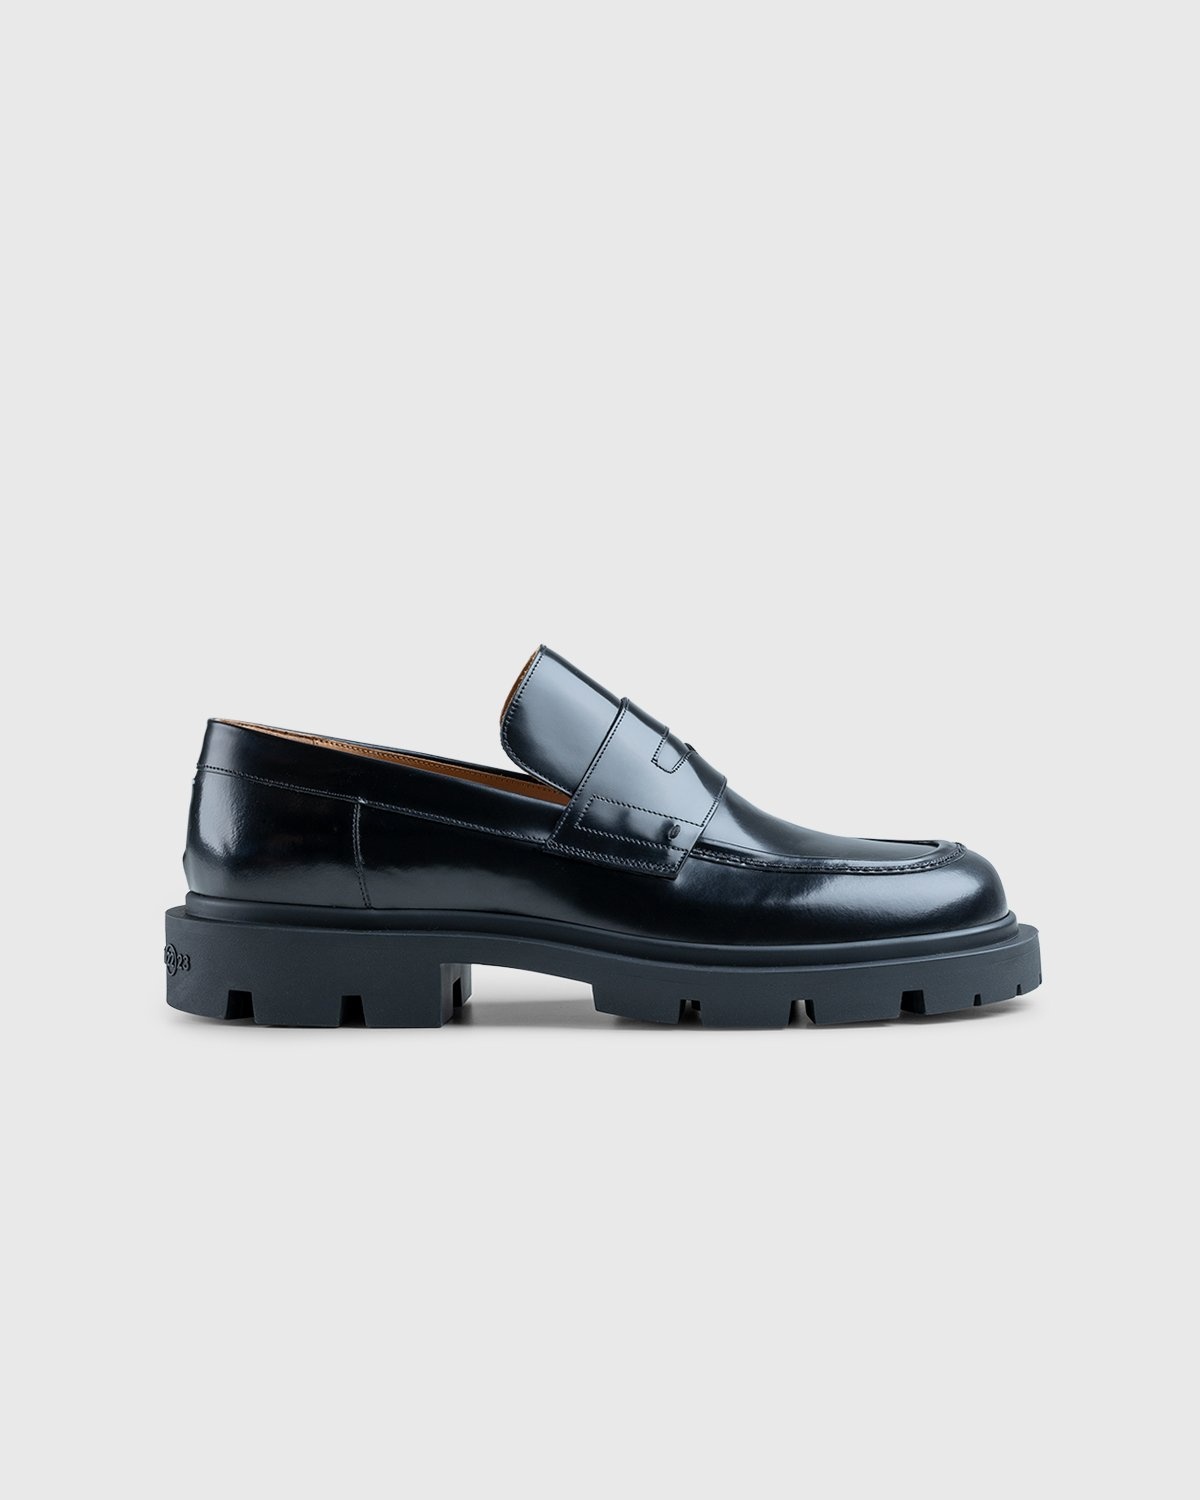 Maison Margiela – Leather Loafers Black - Loafers - Black - Image 1